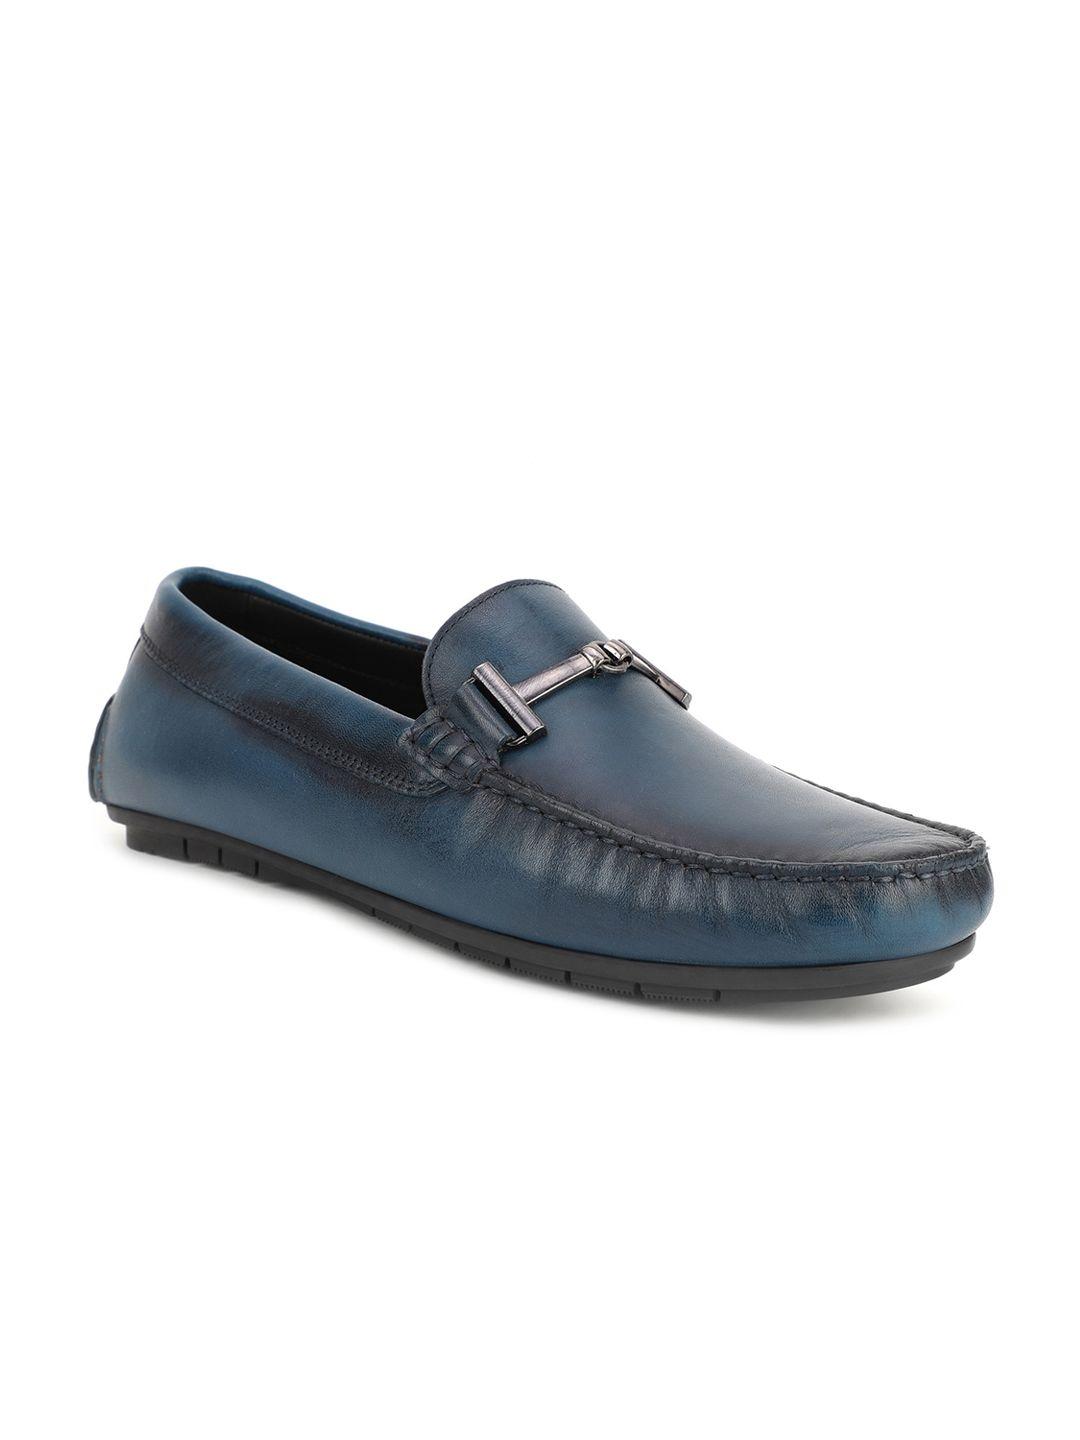 blackberrys-men-navy-blue-solid-leather-loafers